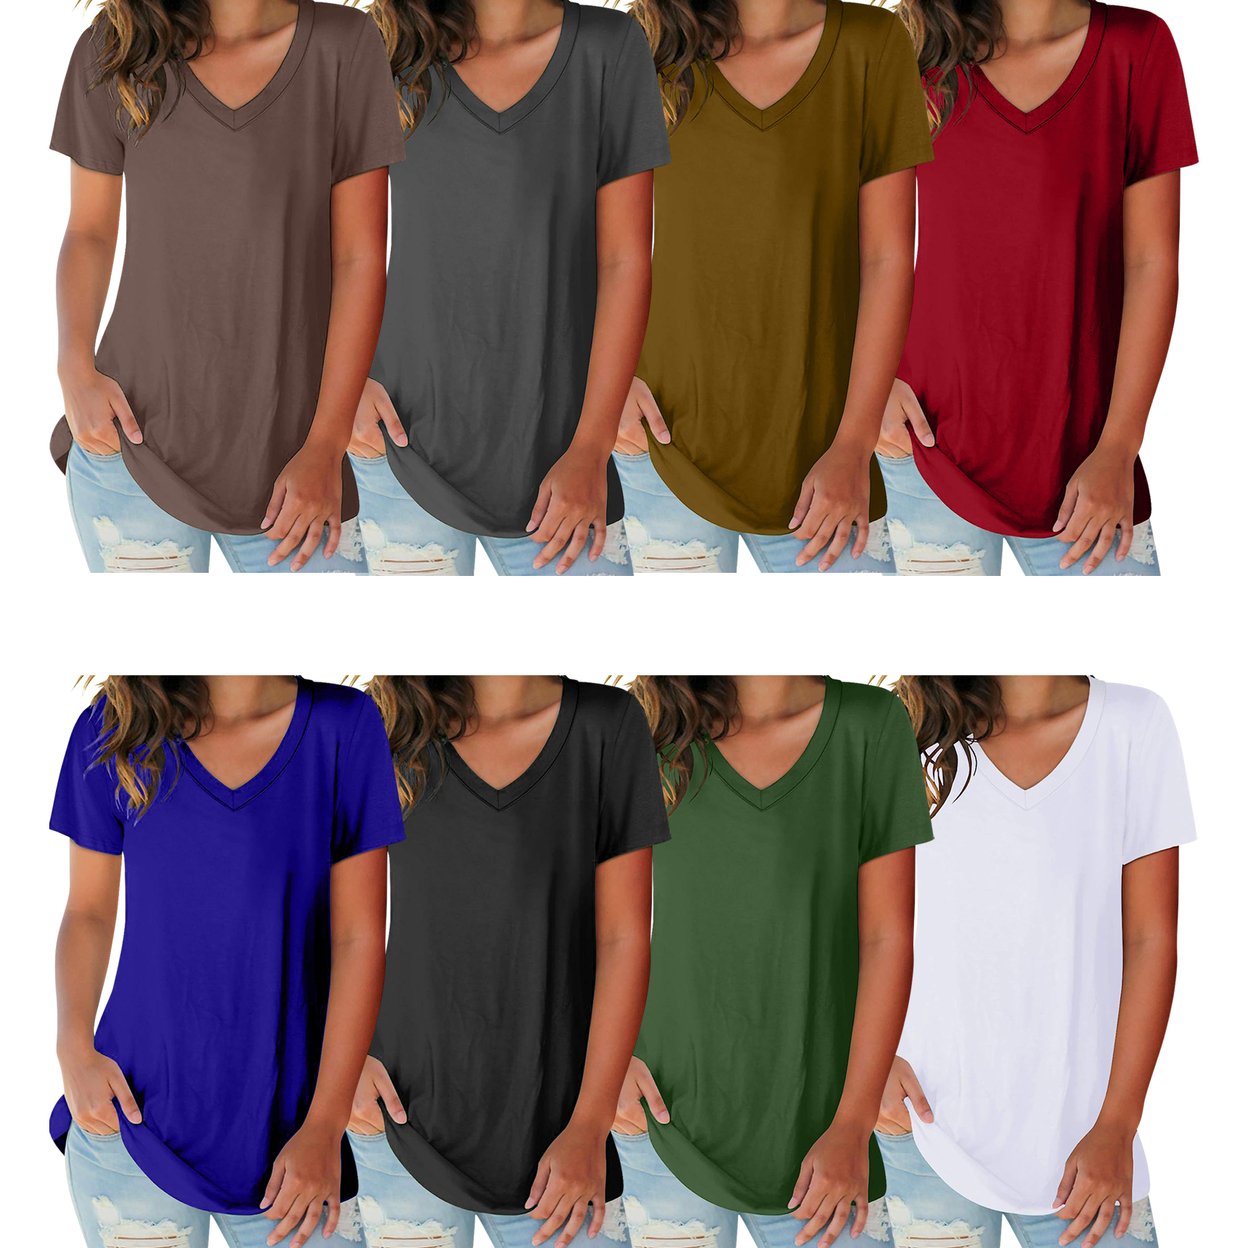 3-Pack: Women's Ultra Soft Smooth Cotton Blend Basic V-Neck Short Sleeve Shirts - Black, White, Green, Large